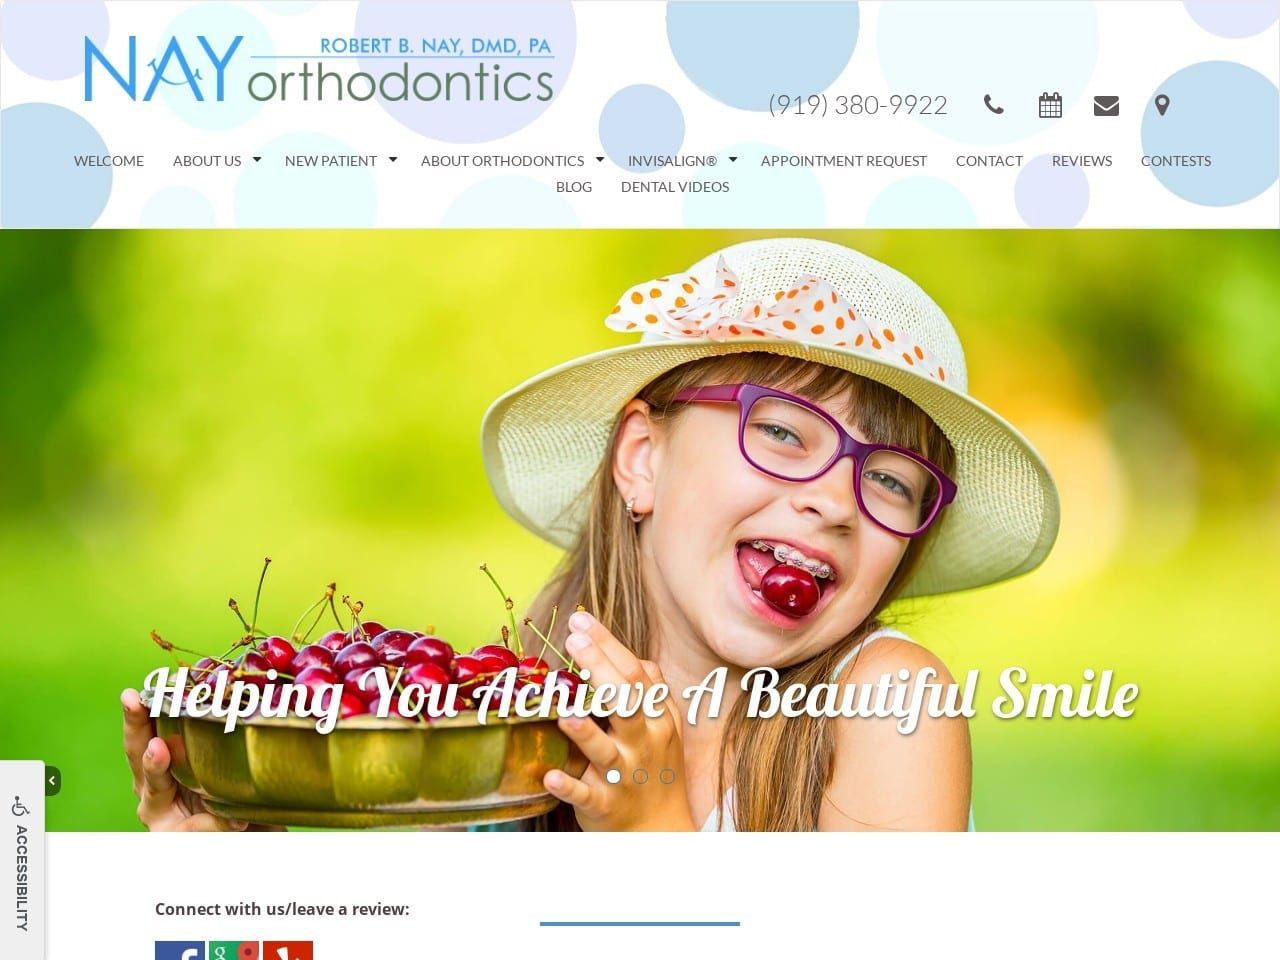 NAY orthodontics Website Screenshot from nayortho.com